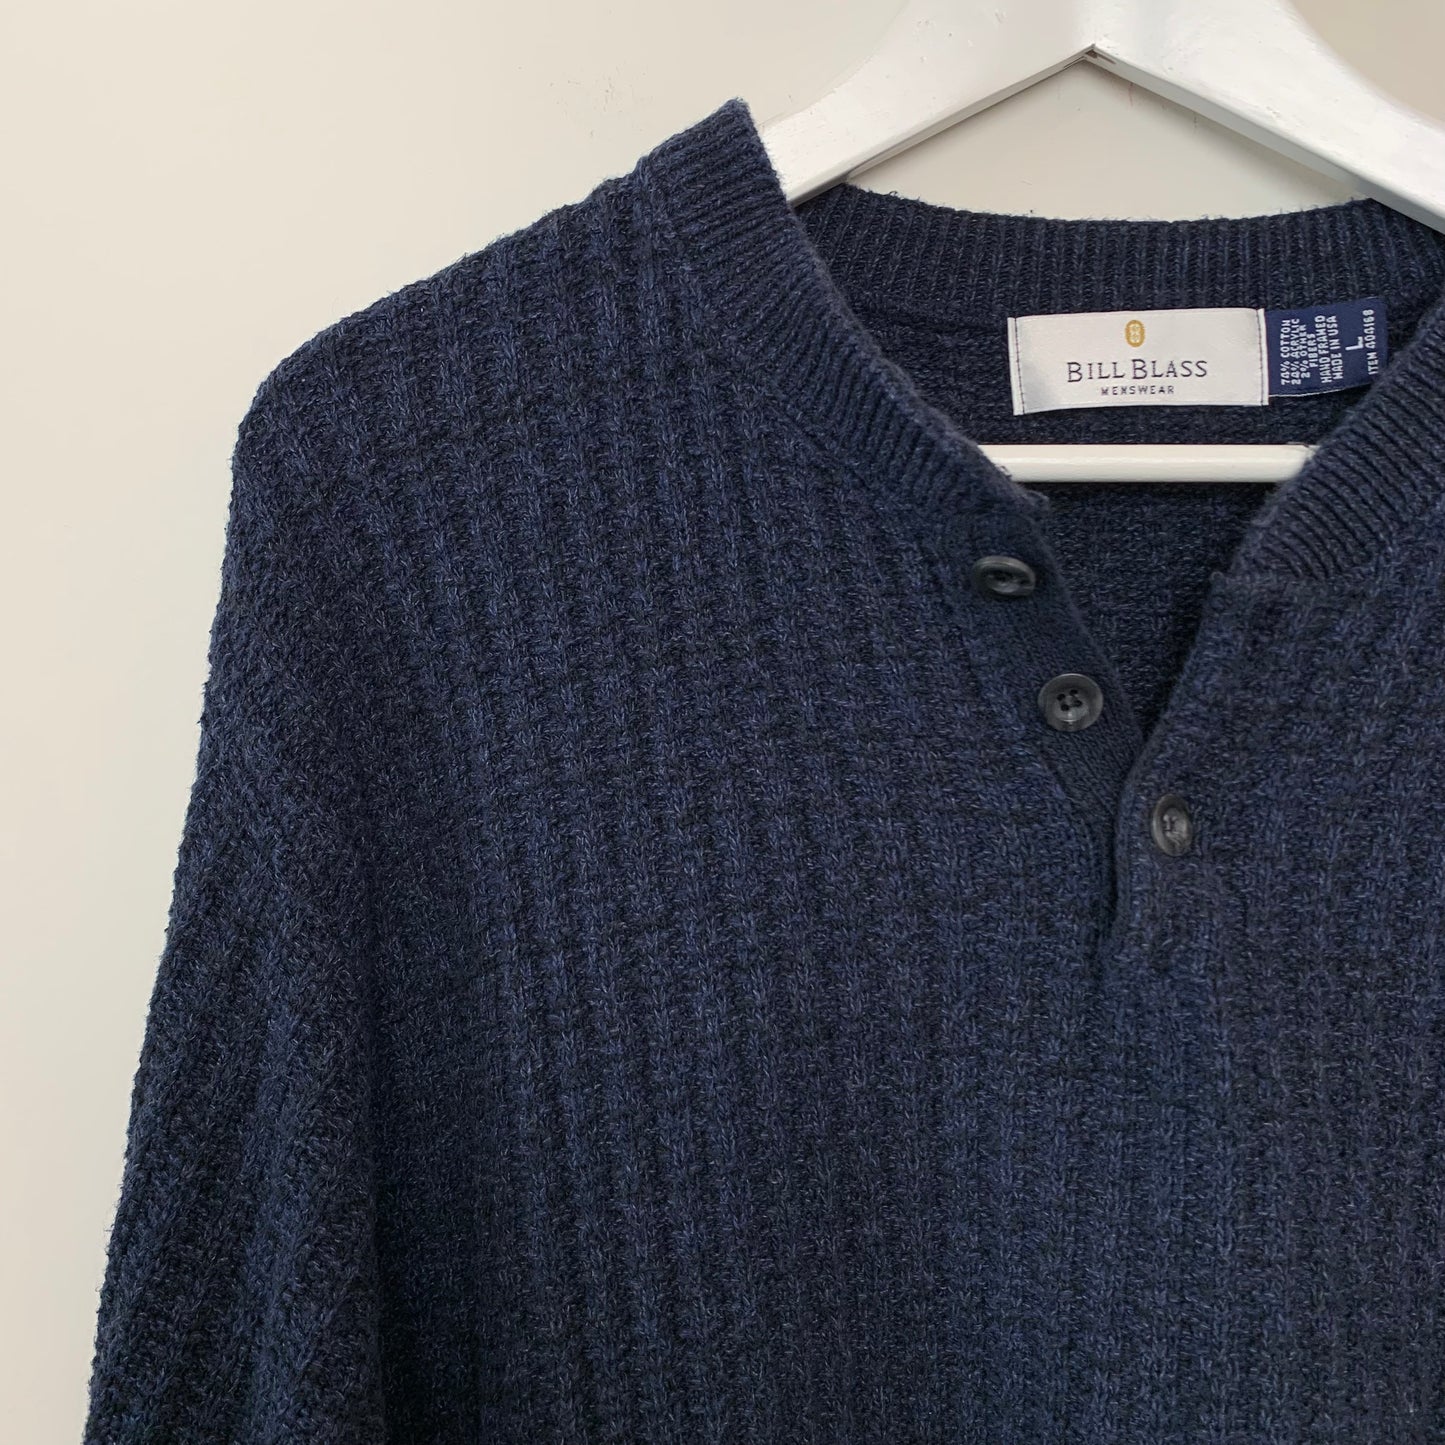 Vintage 90s Bill Blass Chunky Knit Henley Sweater Navy Blue Large